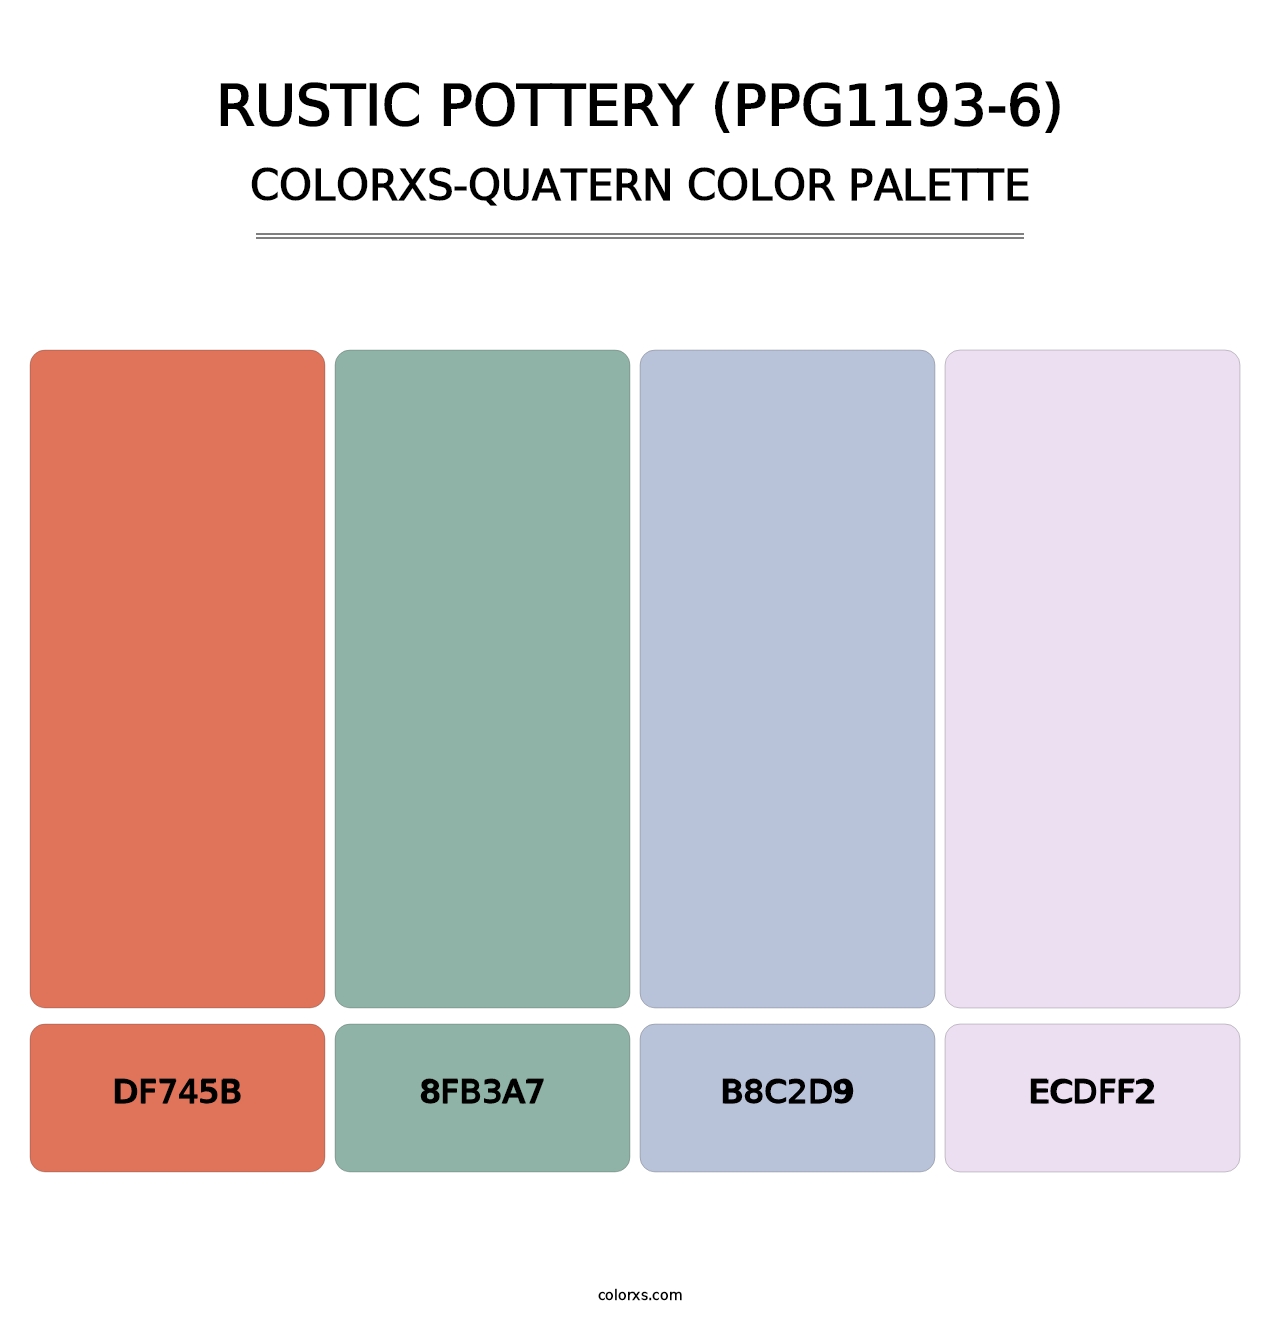 Rustic Pottery (PPG1193-6) - Colorxs Quatern Palette